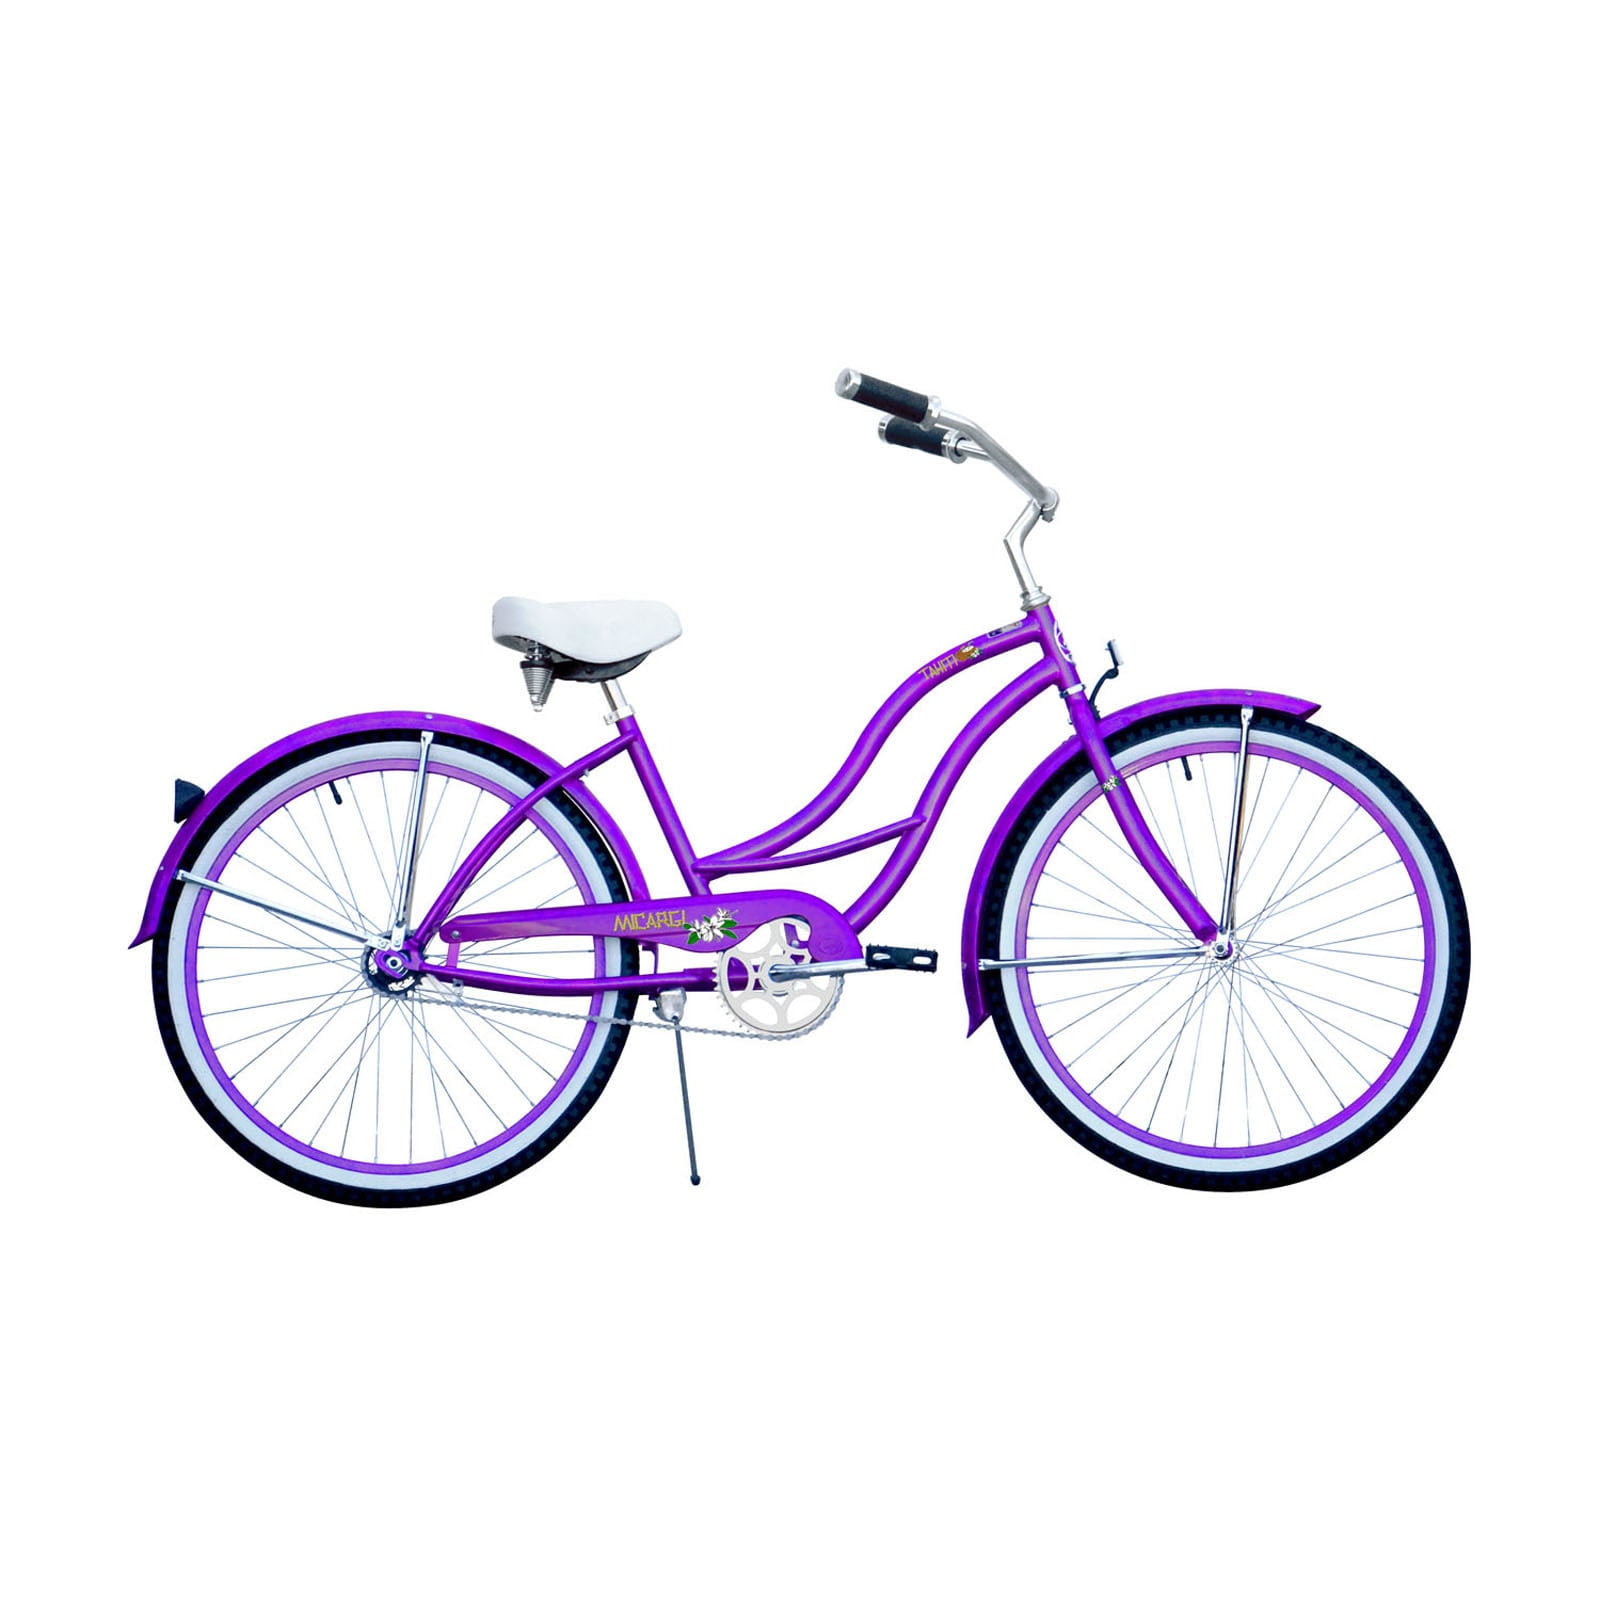 MANGO 26 inch Coaster Brake Wheel Set Beach Cruiser Bike Bicycle with Tires and Tubes!